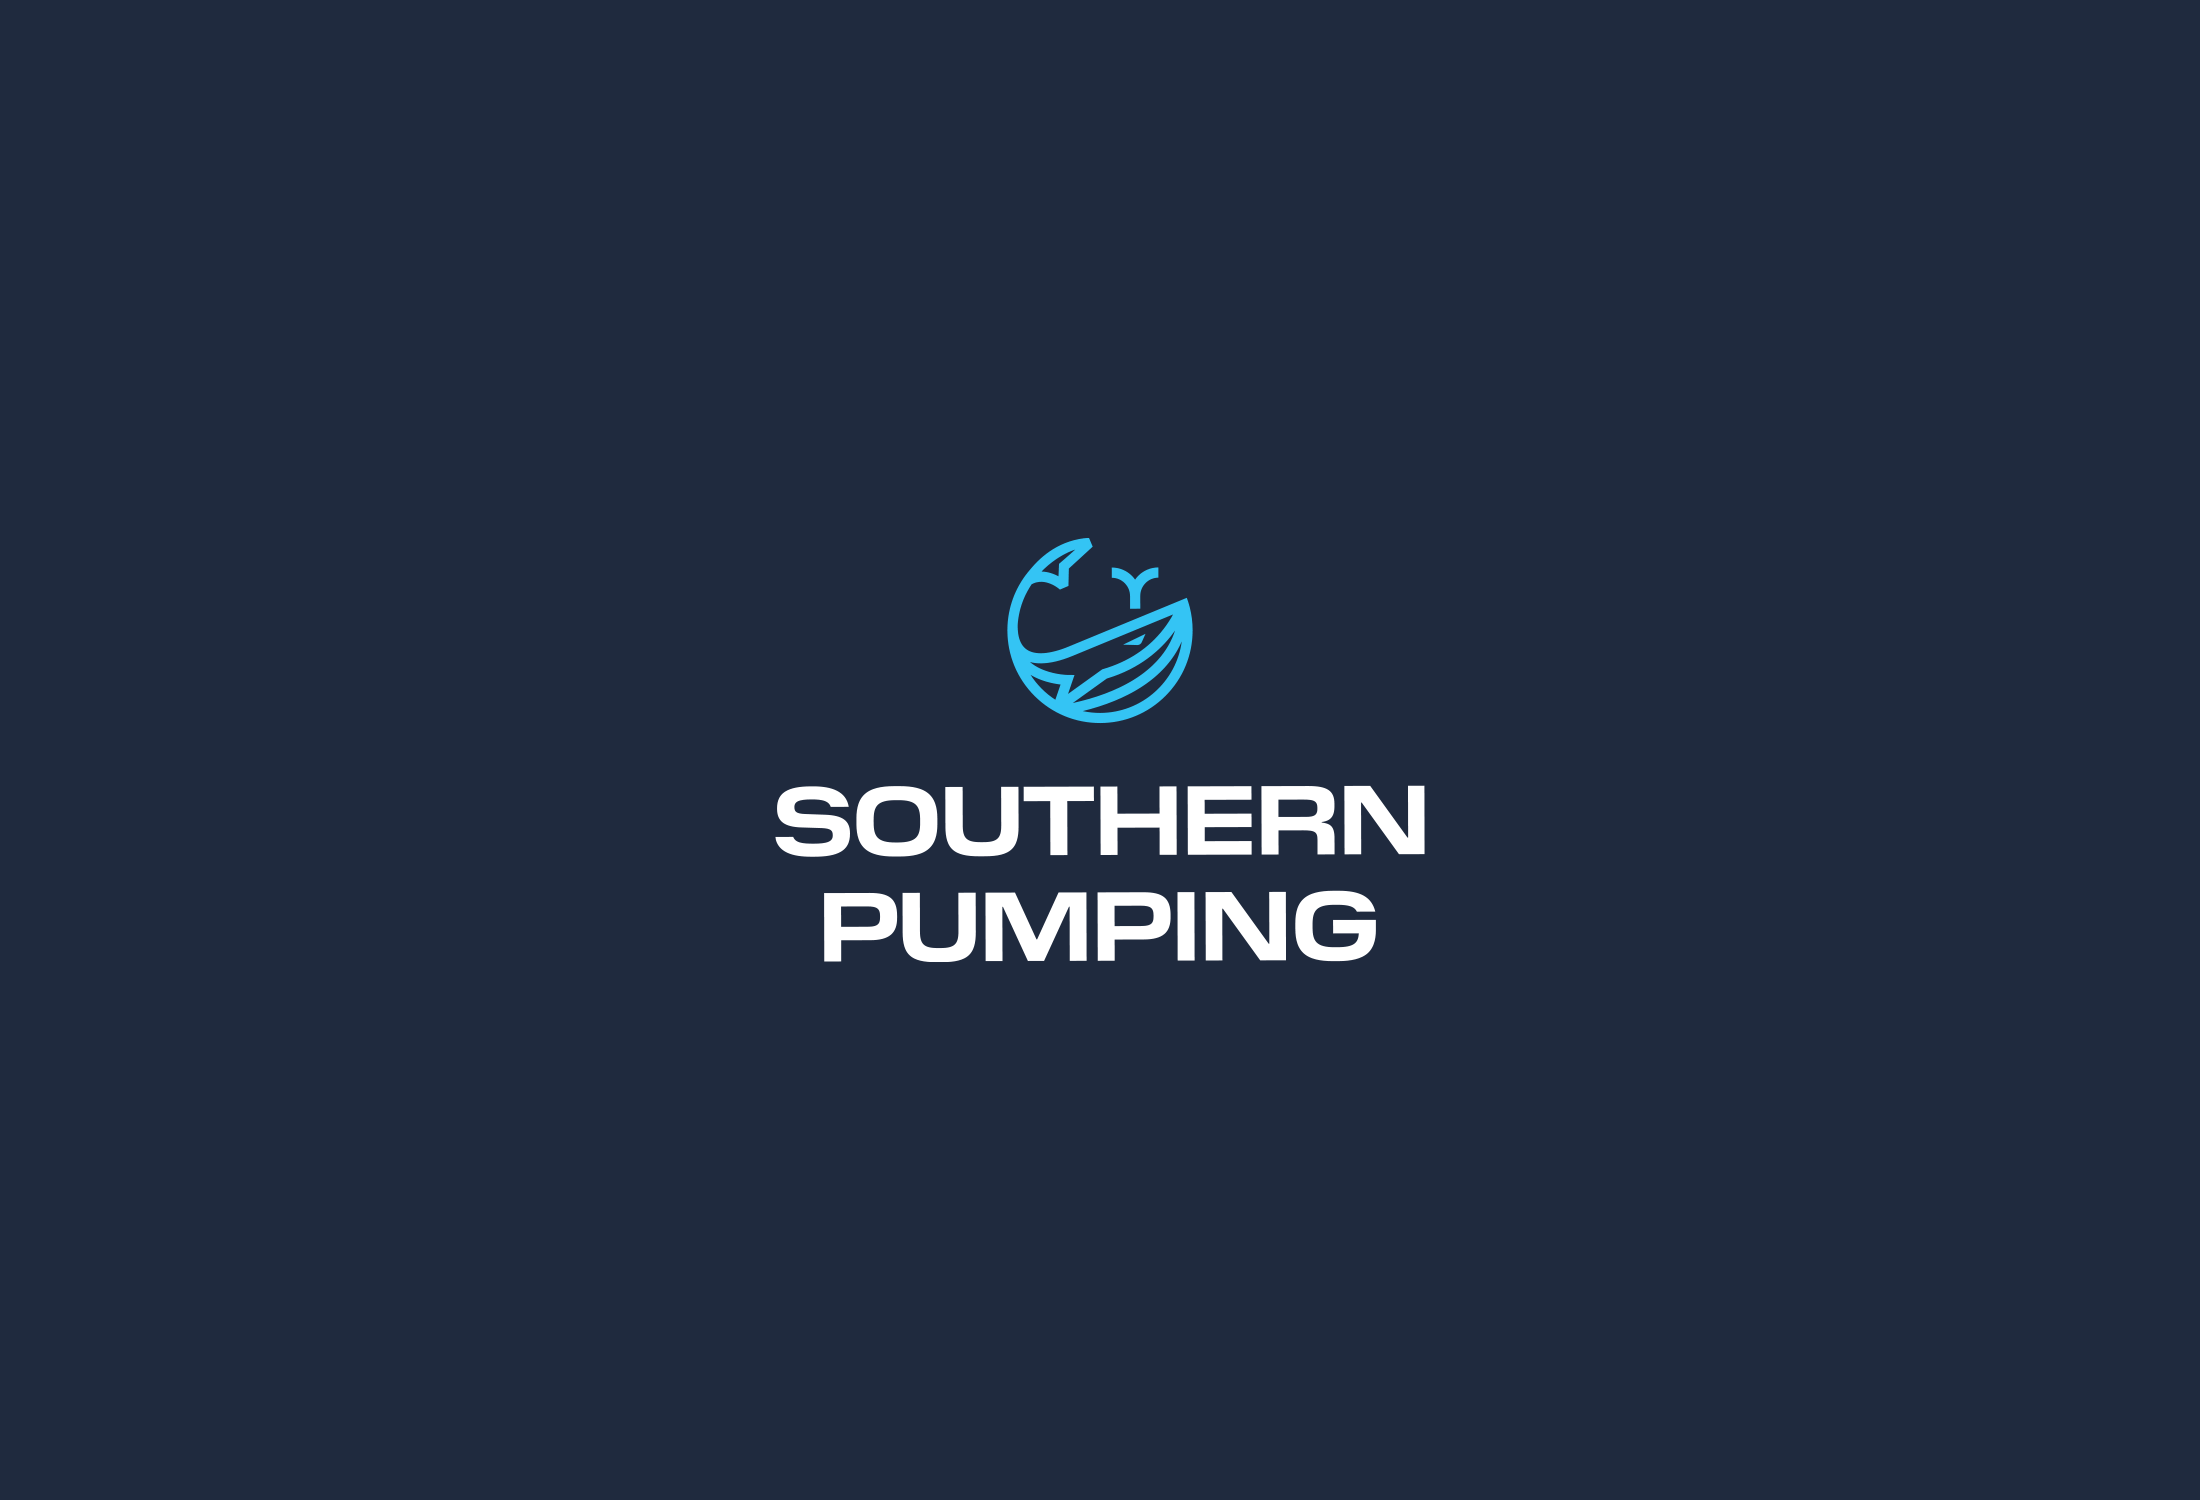 Southern Pumping brand identity